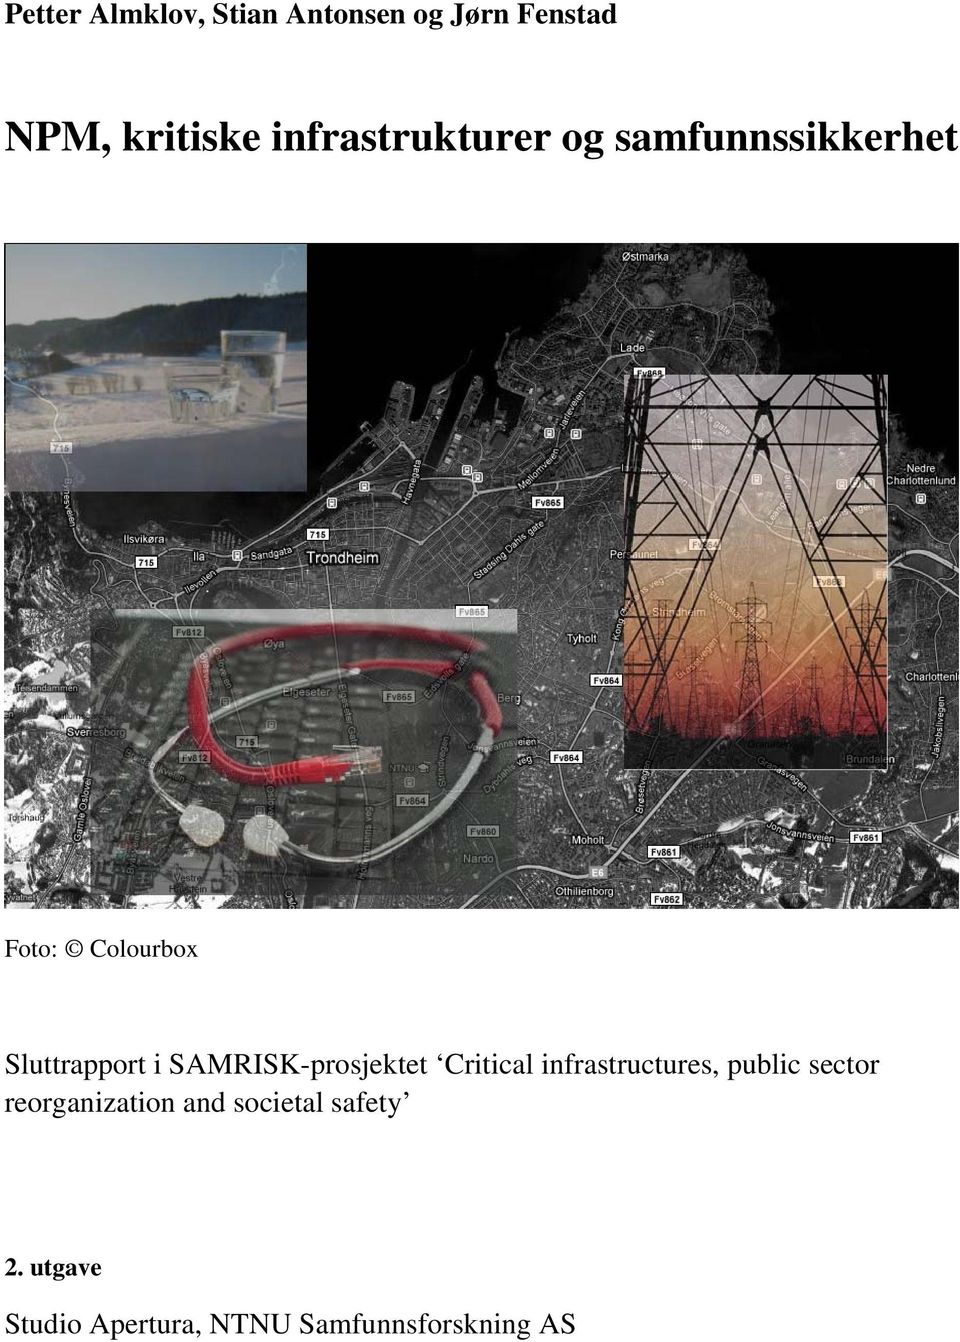 SAMRISK-prosjektet Critical infrastructures, public sector